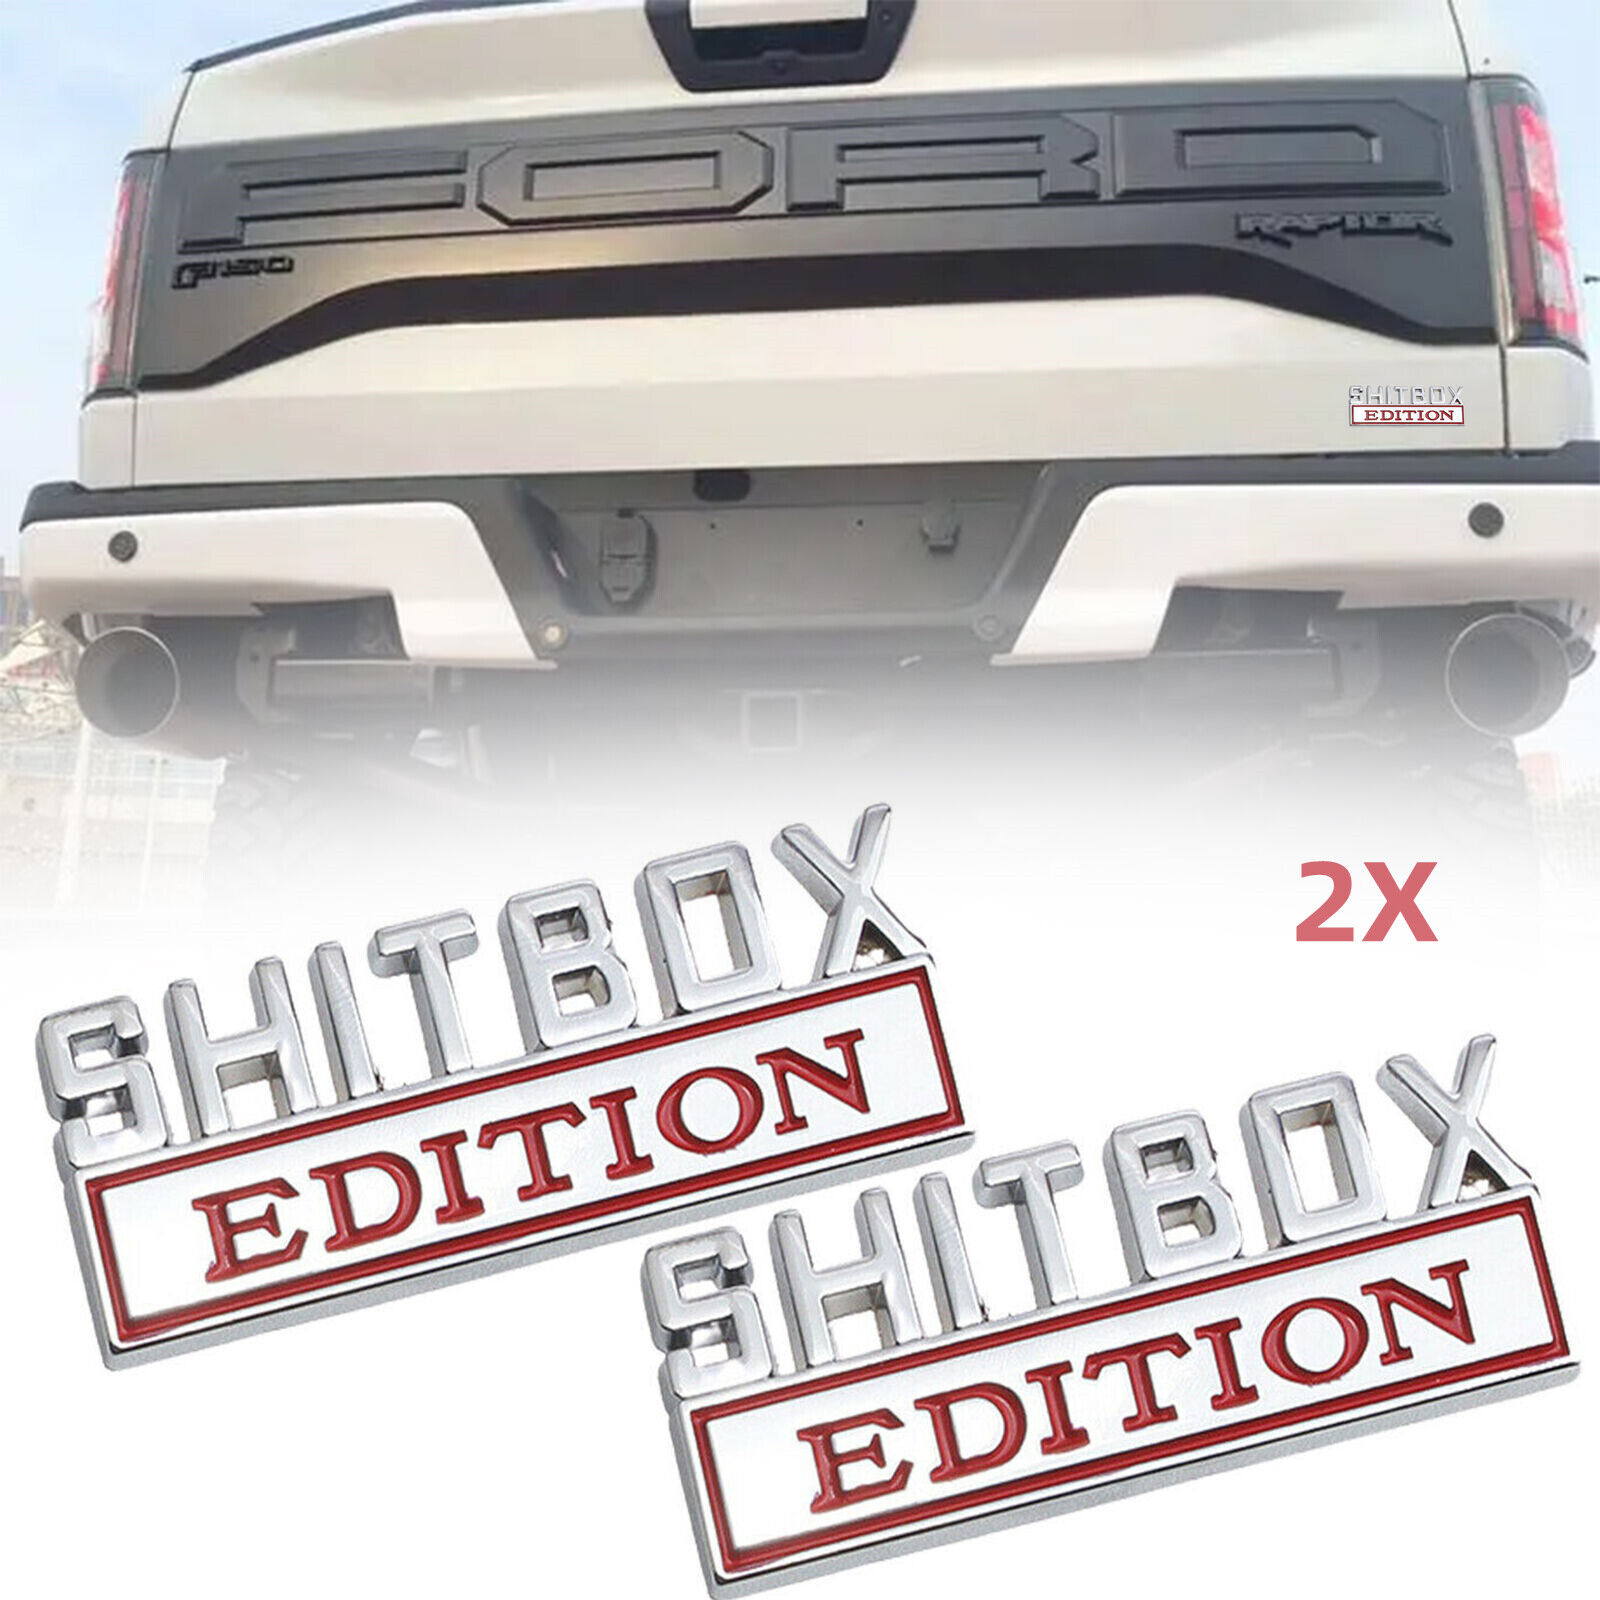 2Pcs 3D ShitBox Edition  Car Truck Emblem Funny Badge Sticker Decal Decorate New